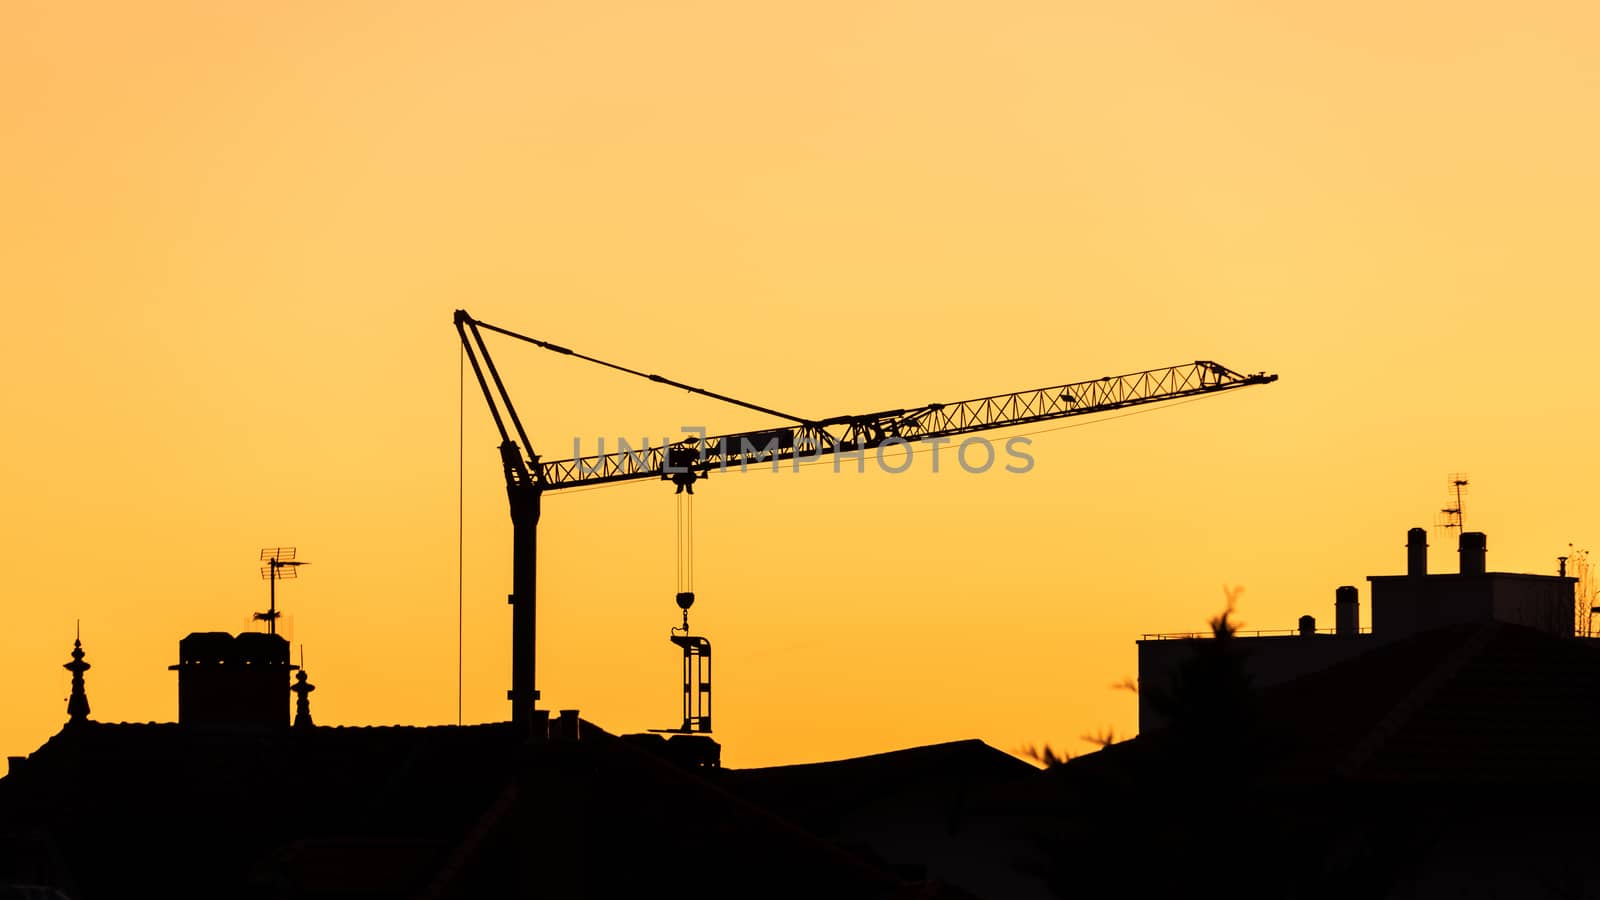 Construction crane silhouette at sunset by dutourdumonde